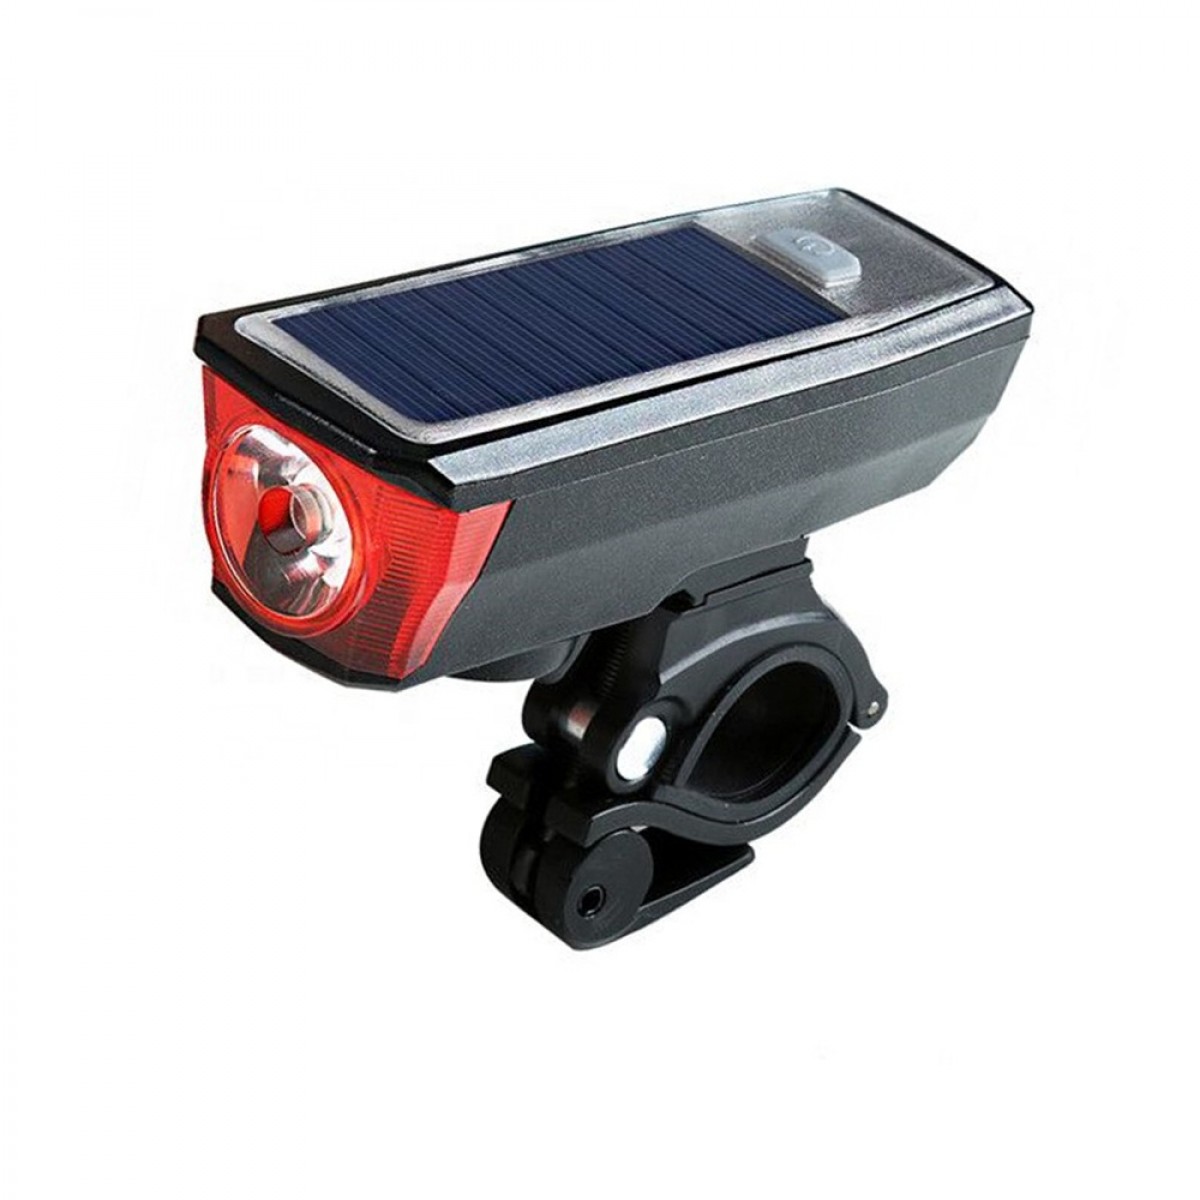 Luz Led Bicicleta Recargable USB con Panel Solar – Biratto